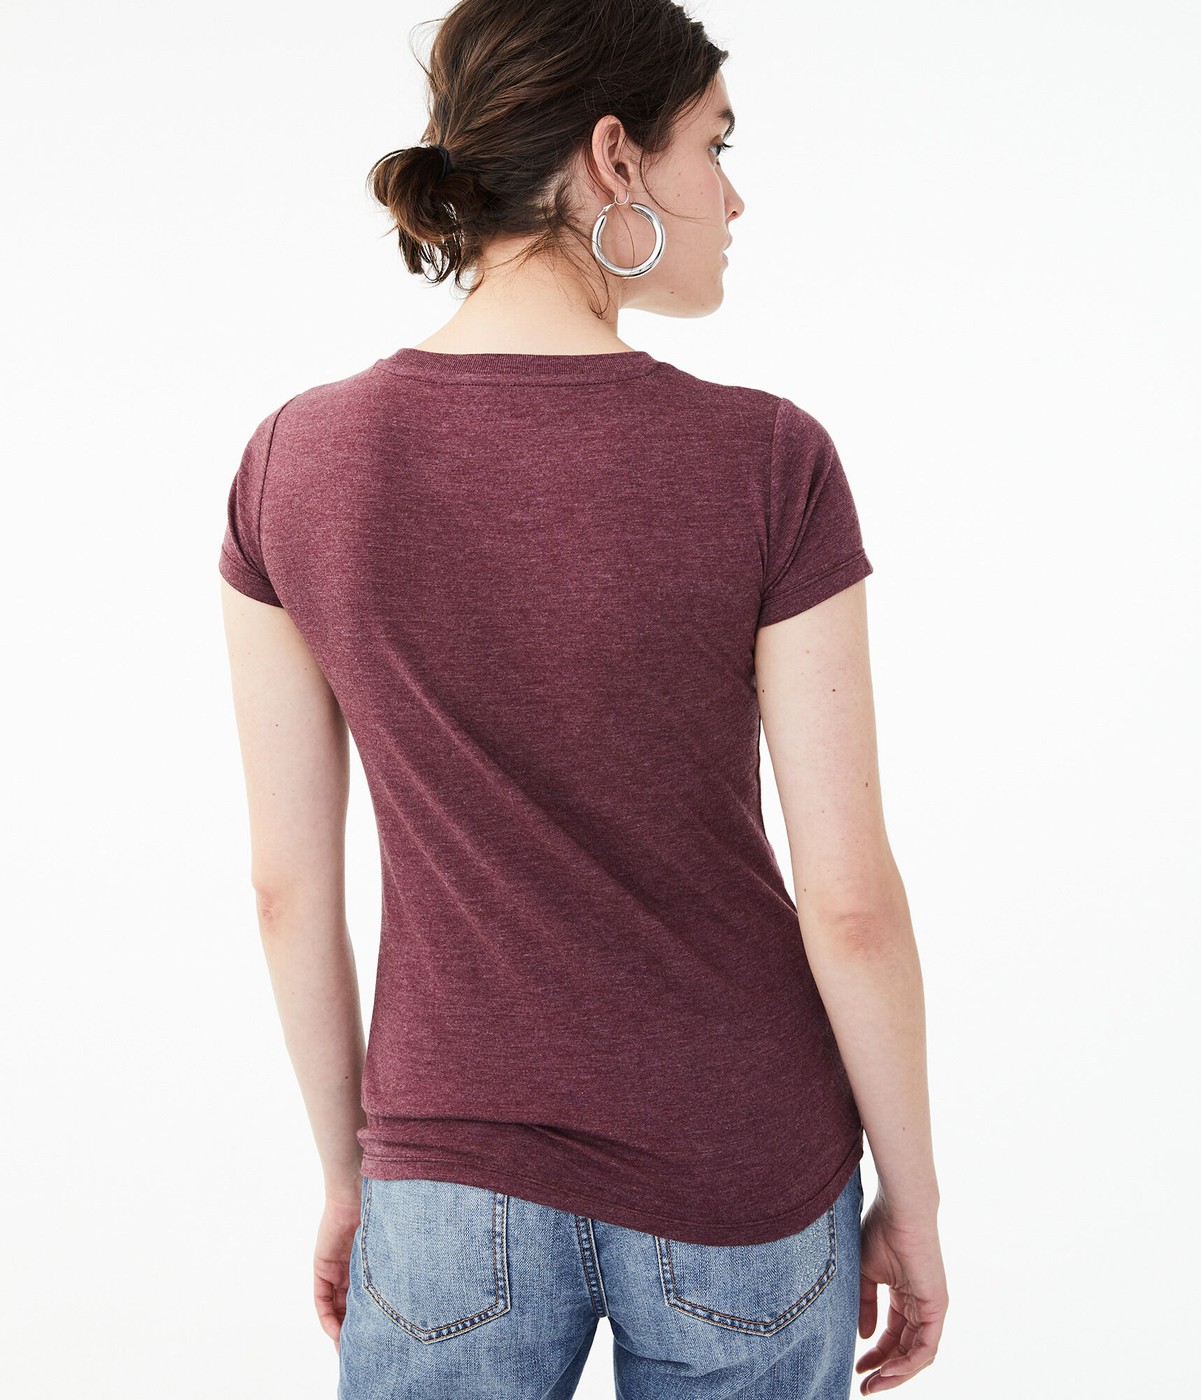 Бордовая футболка - женская футболка Aeropostale, S, S